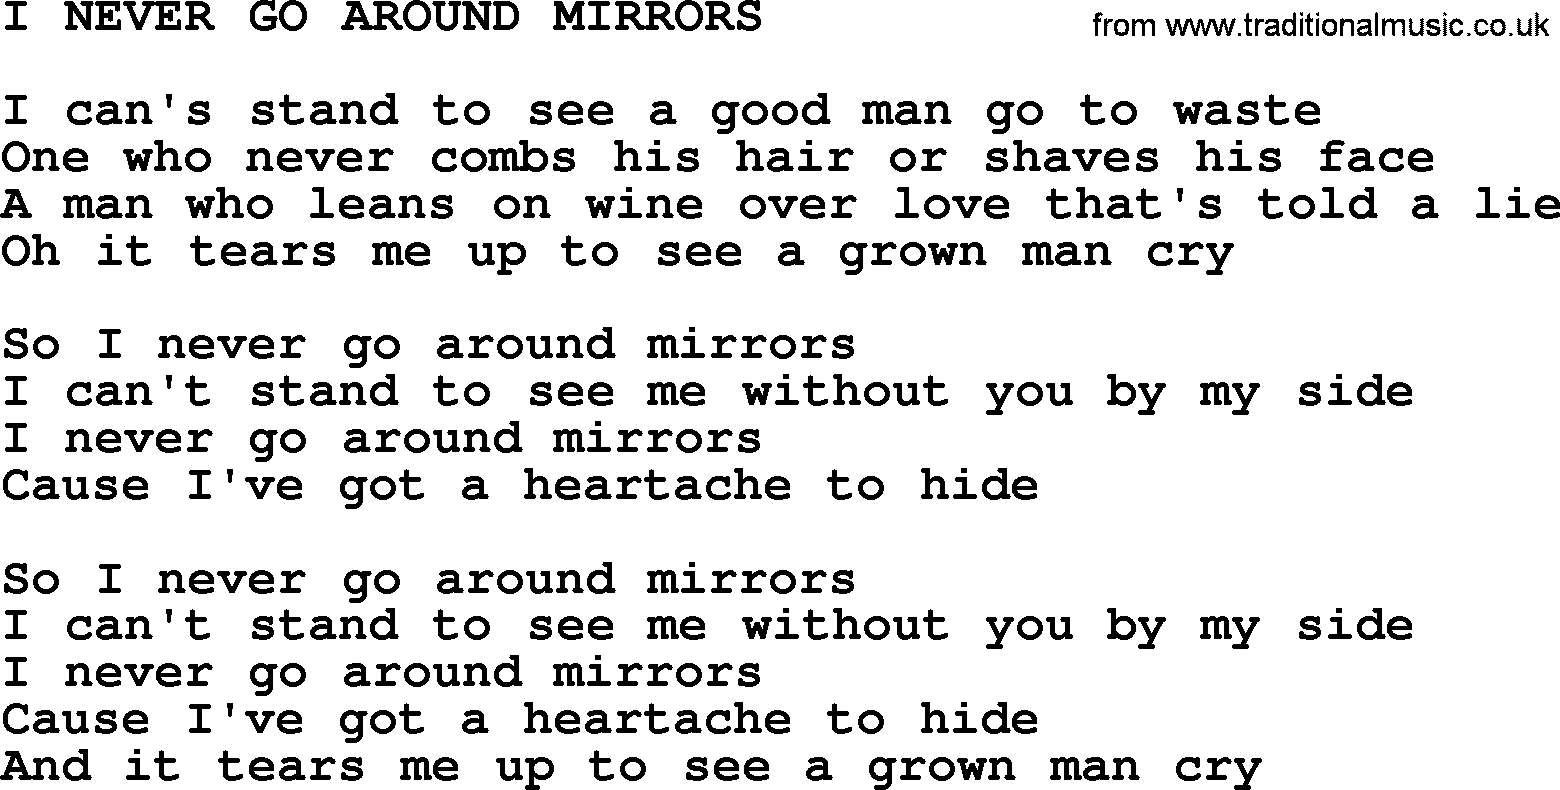 Merle Haggard song: I Never Go Around Mirrors, lyrics.